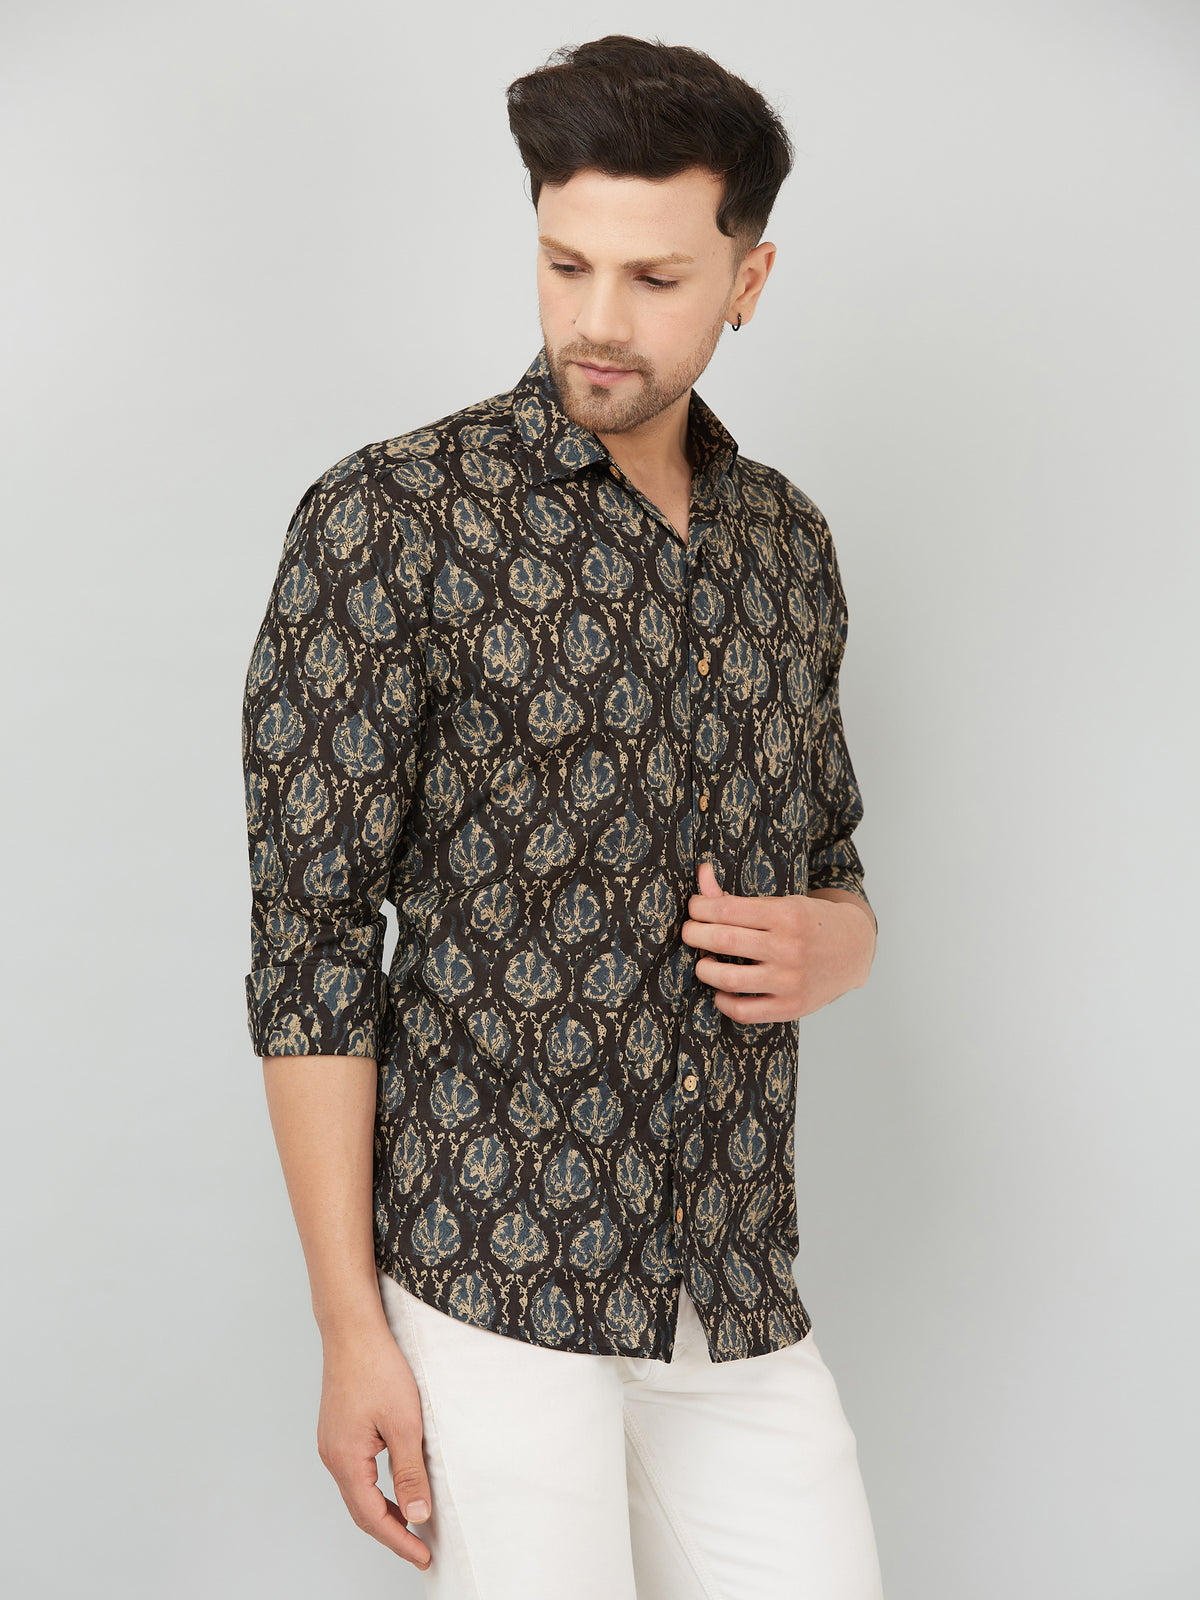 Louis Monarch Premium Black Jaipuri Printed Cotton Casual Shirt